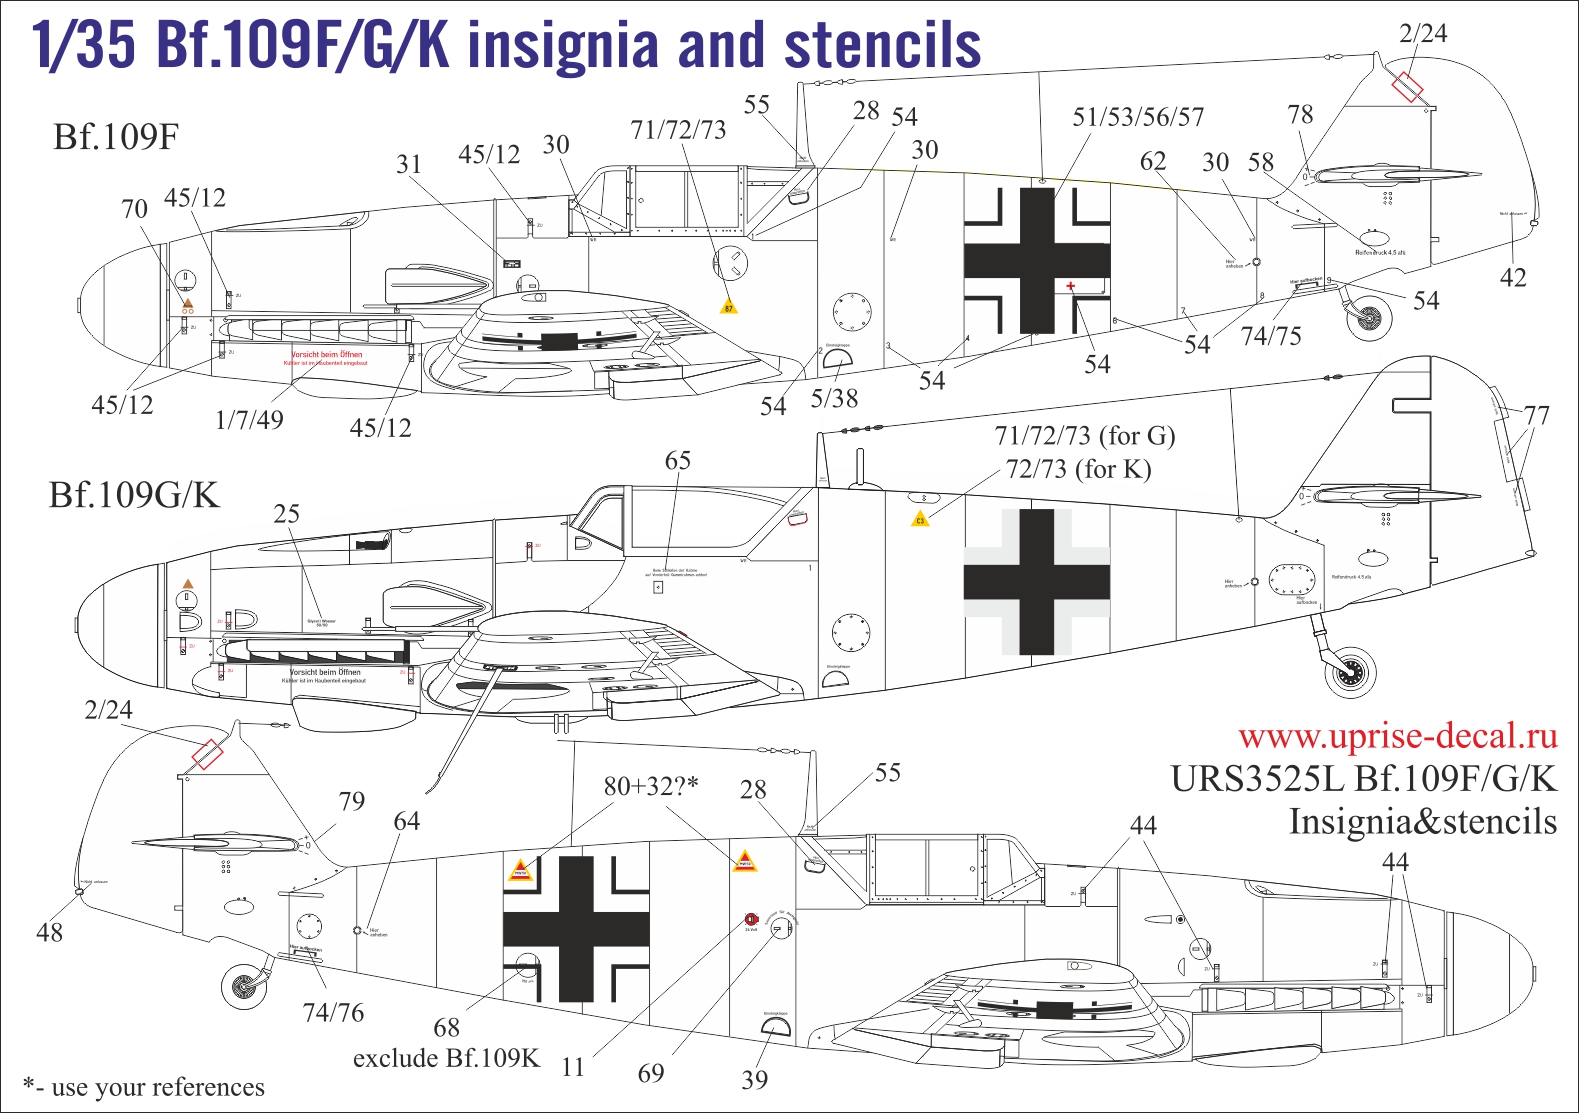 URS3525L  декали  Bf.109F/G/K insignia & stencils for Border kit  (1:35)